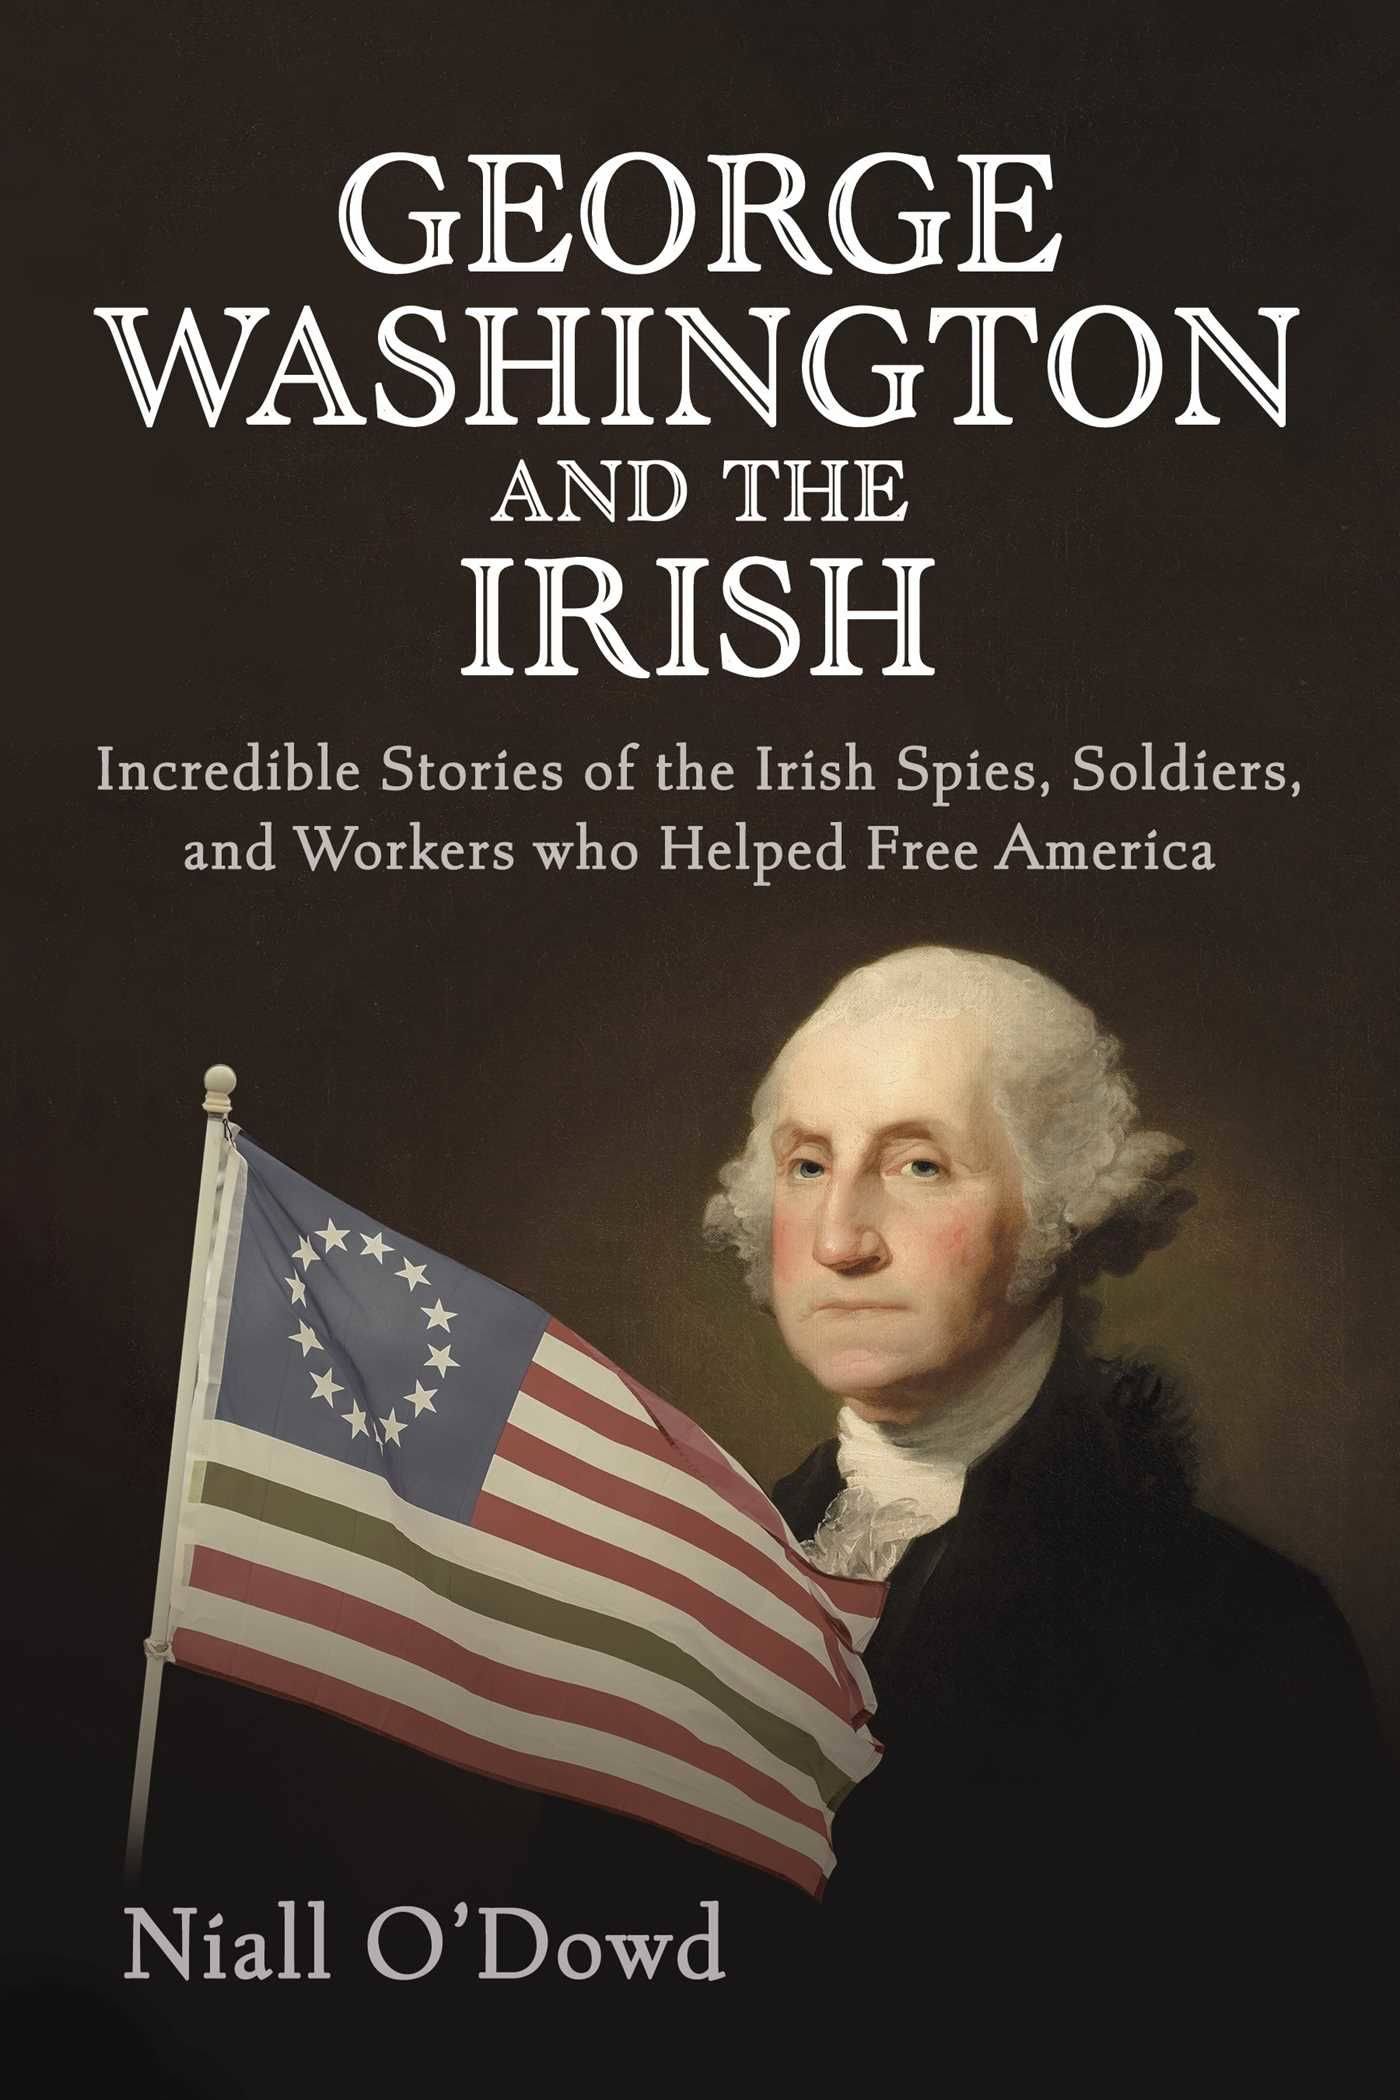 George Washington and The Irish by Niall O'Dowd